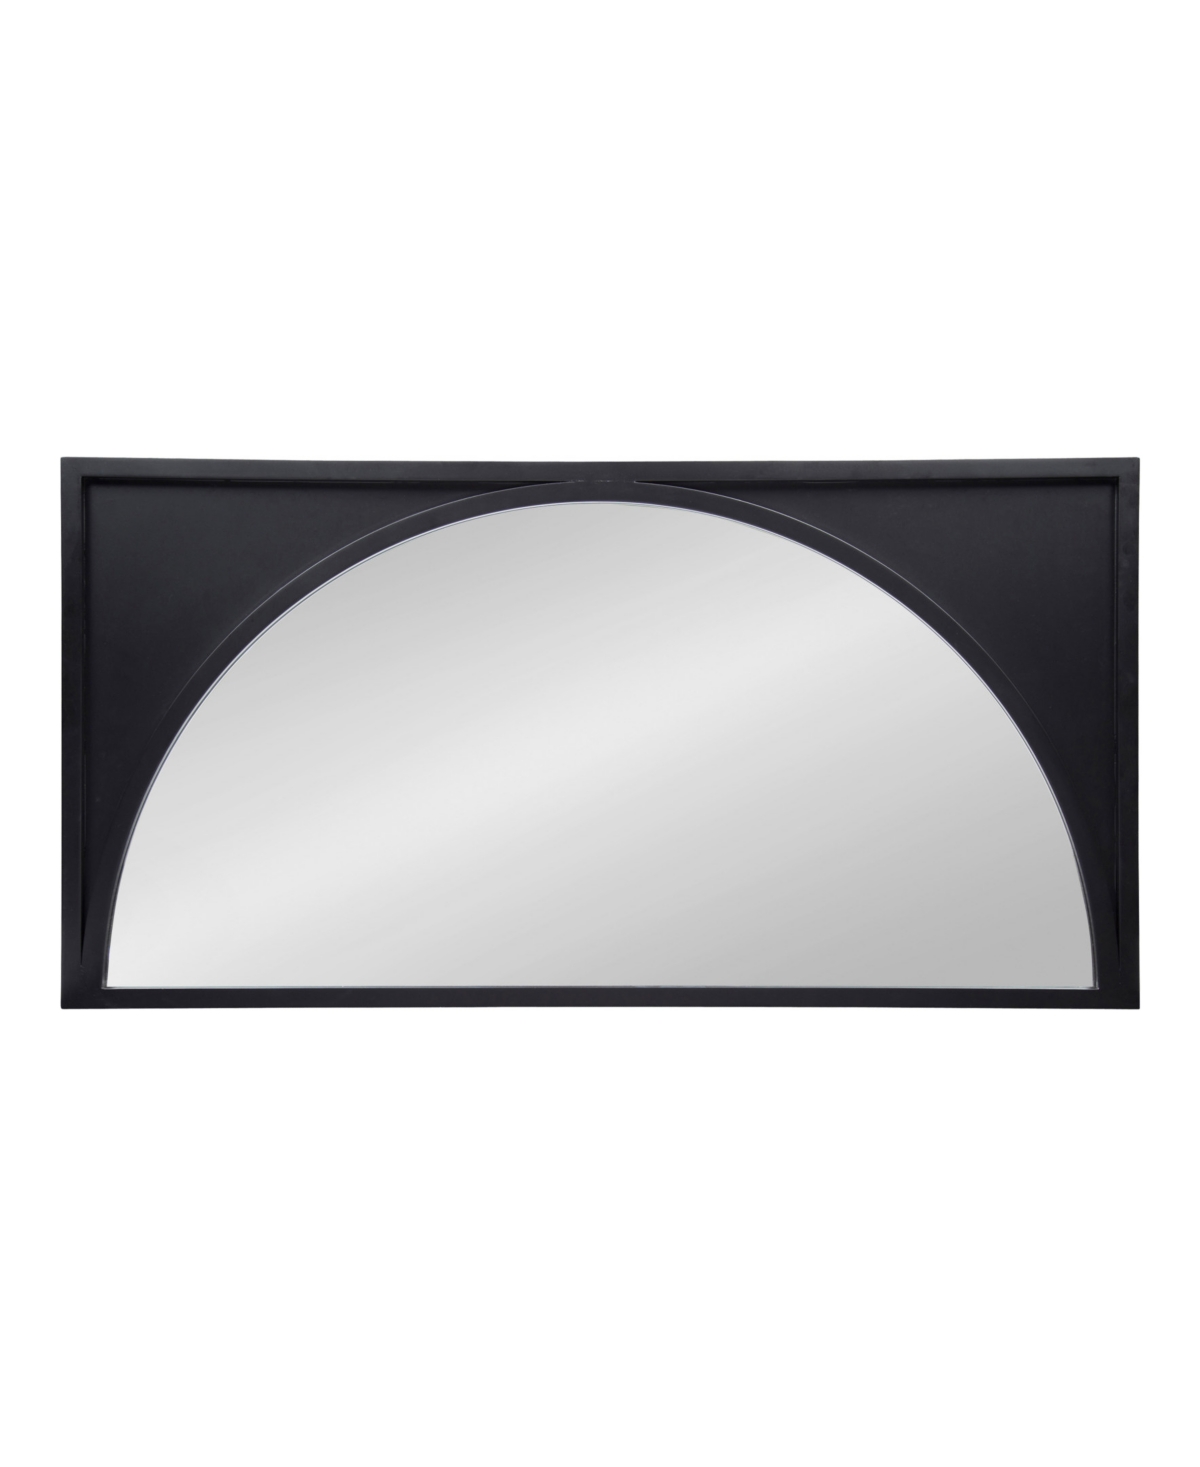 andover Wooden Wall Panel Arch Mirror - Black